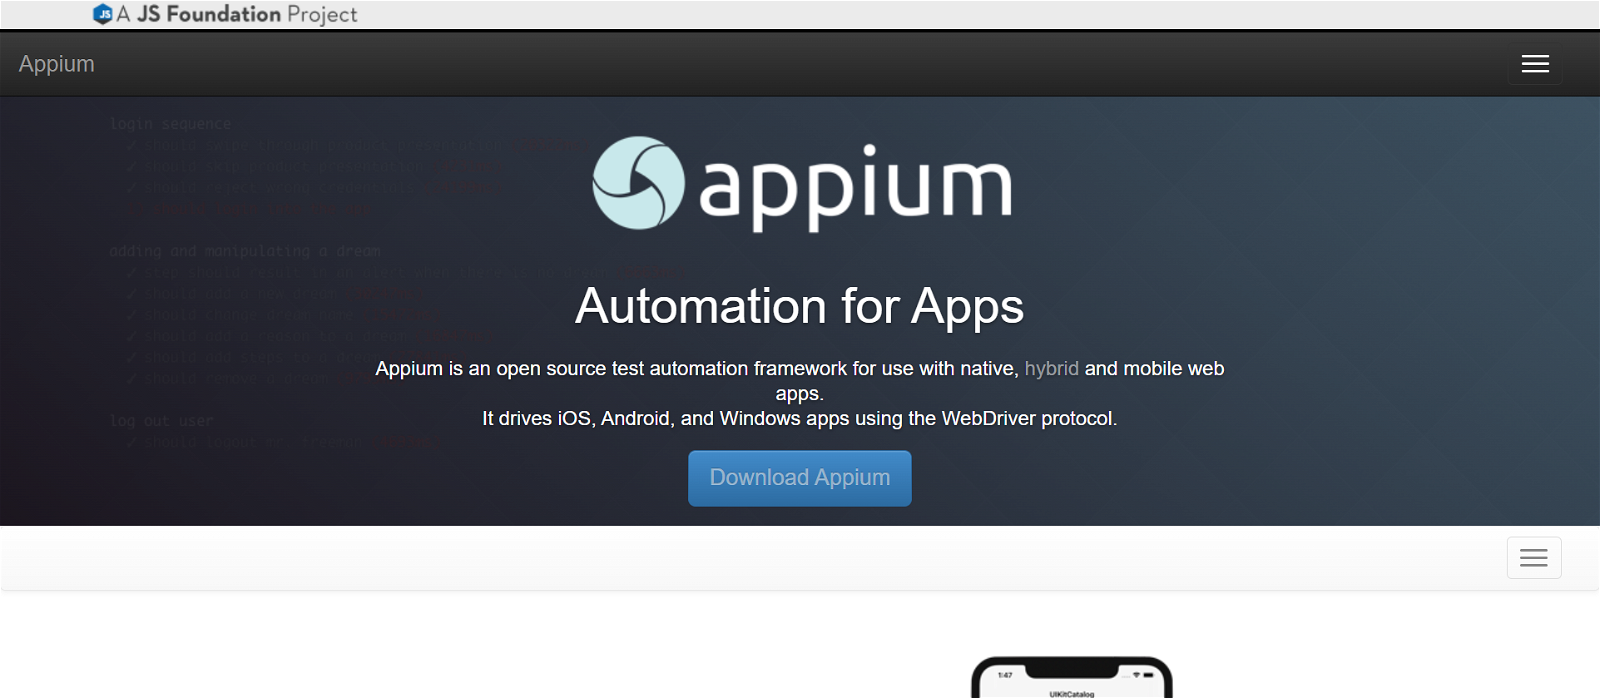 Appium API tool